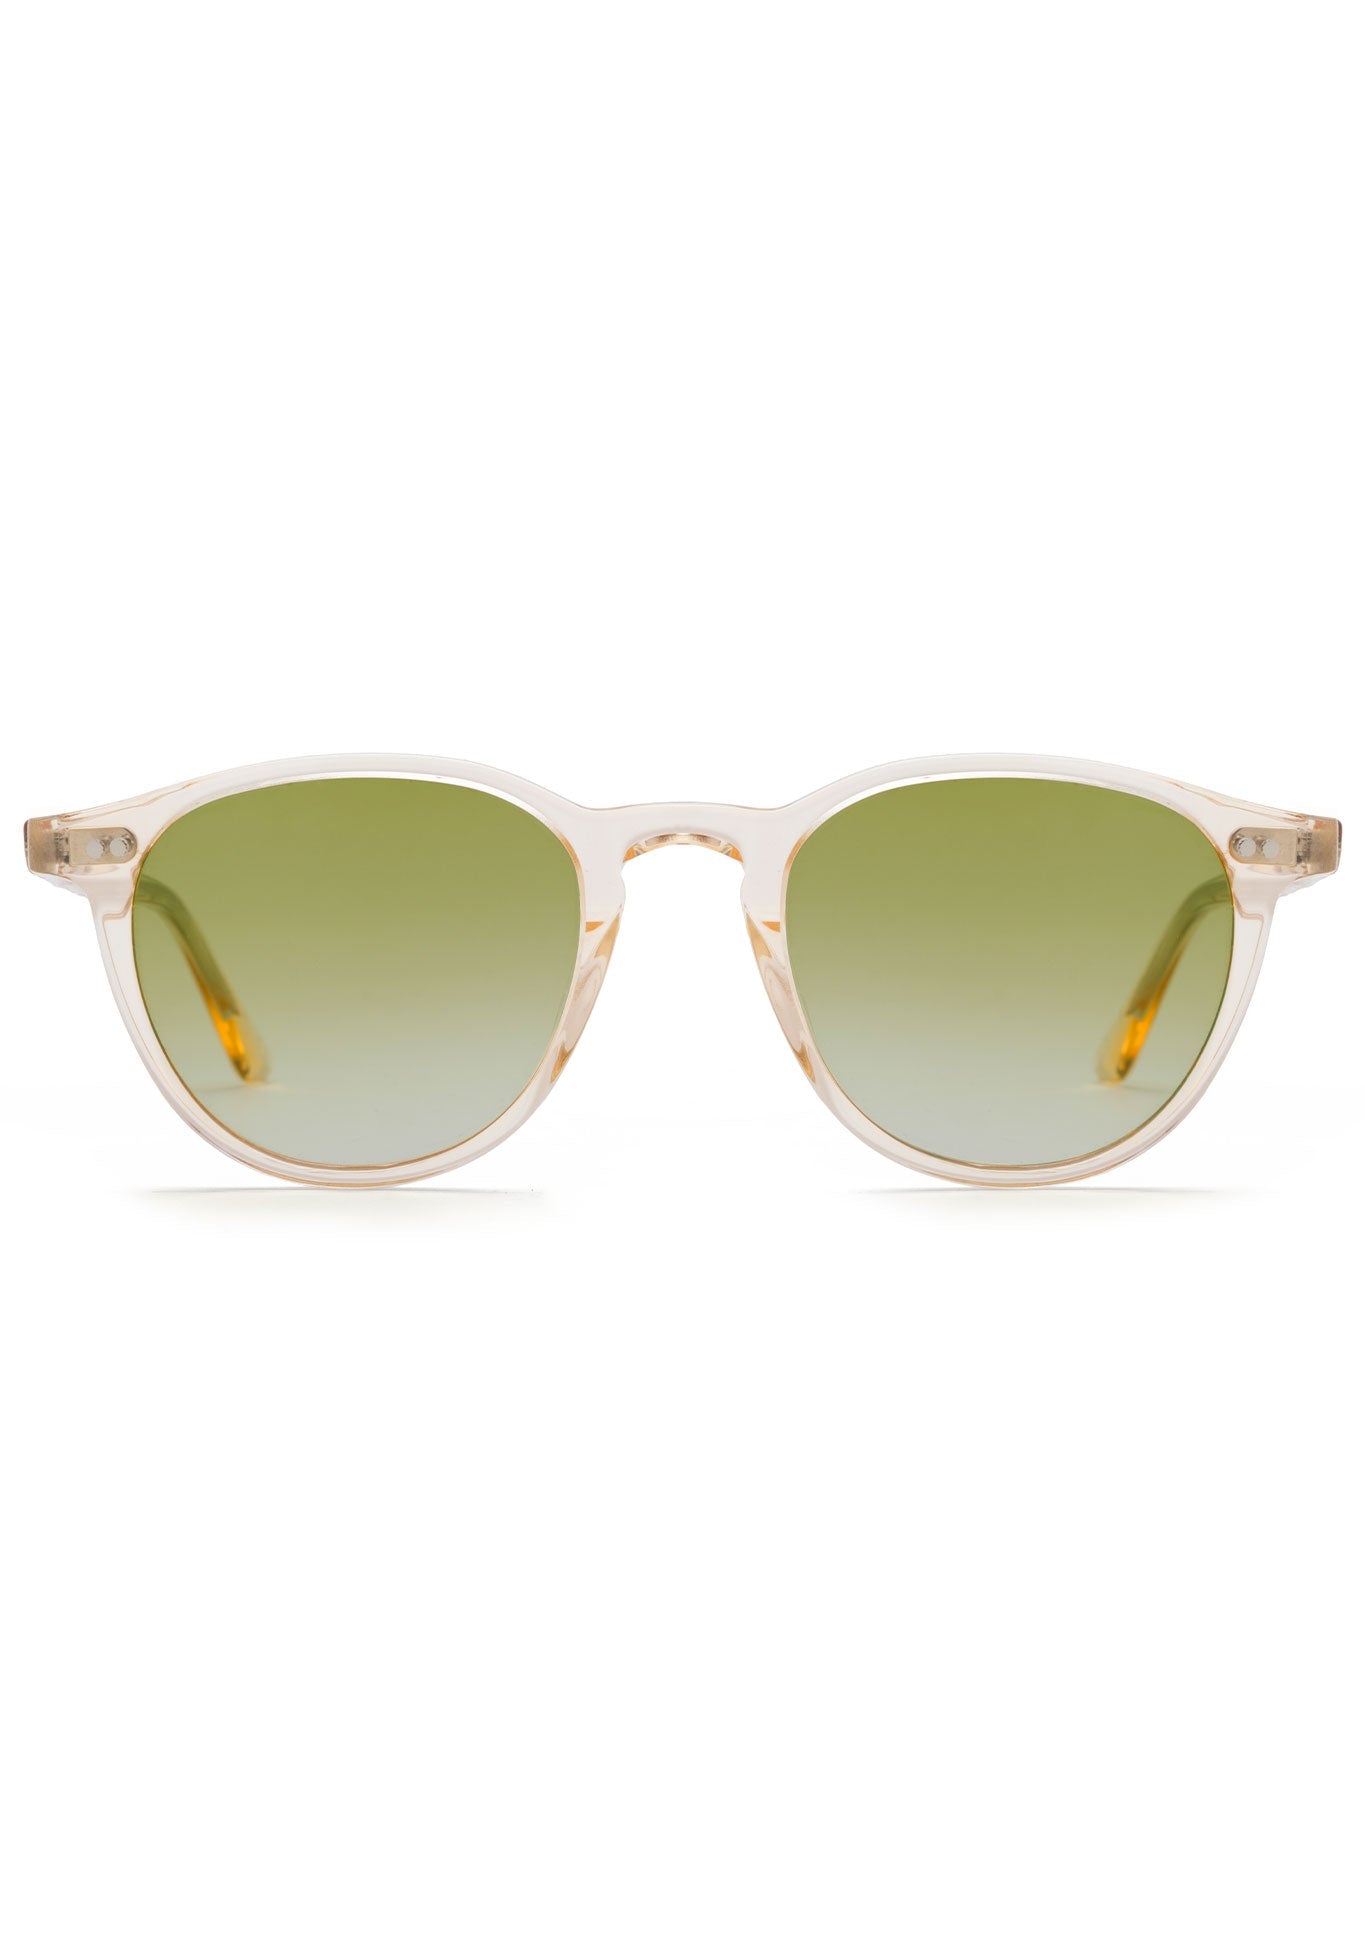 KREWE SUNGLASSEES - LANDRY | Haze + Custom Vanity Tint handcrafted, luxury yellow sunglasses with custom green gradient tinted lenses